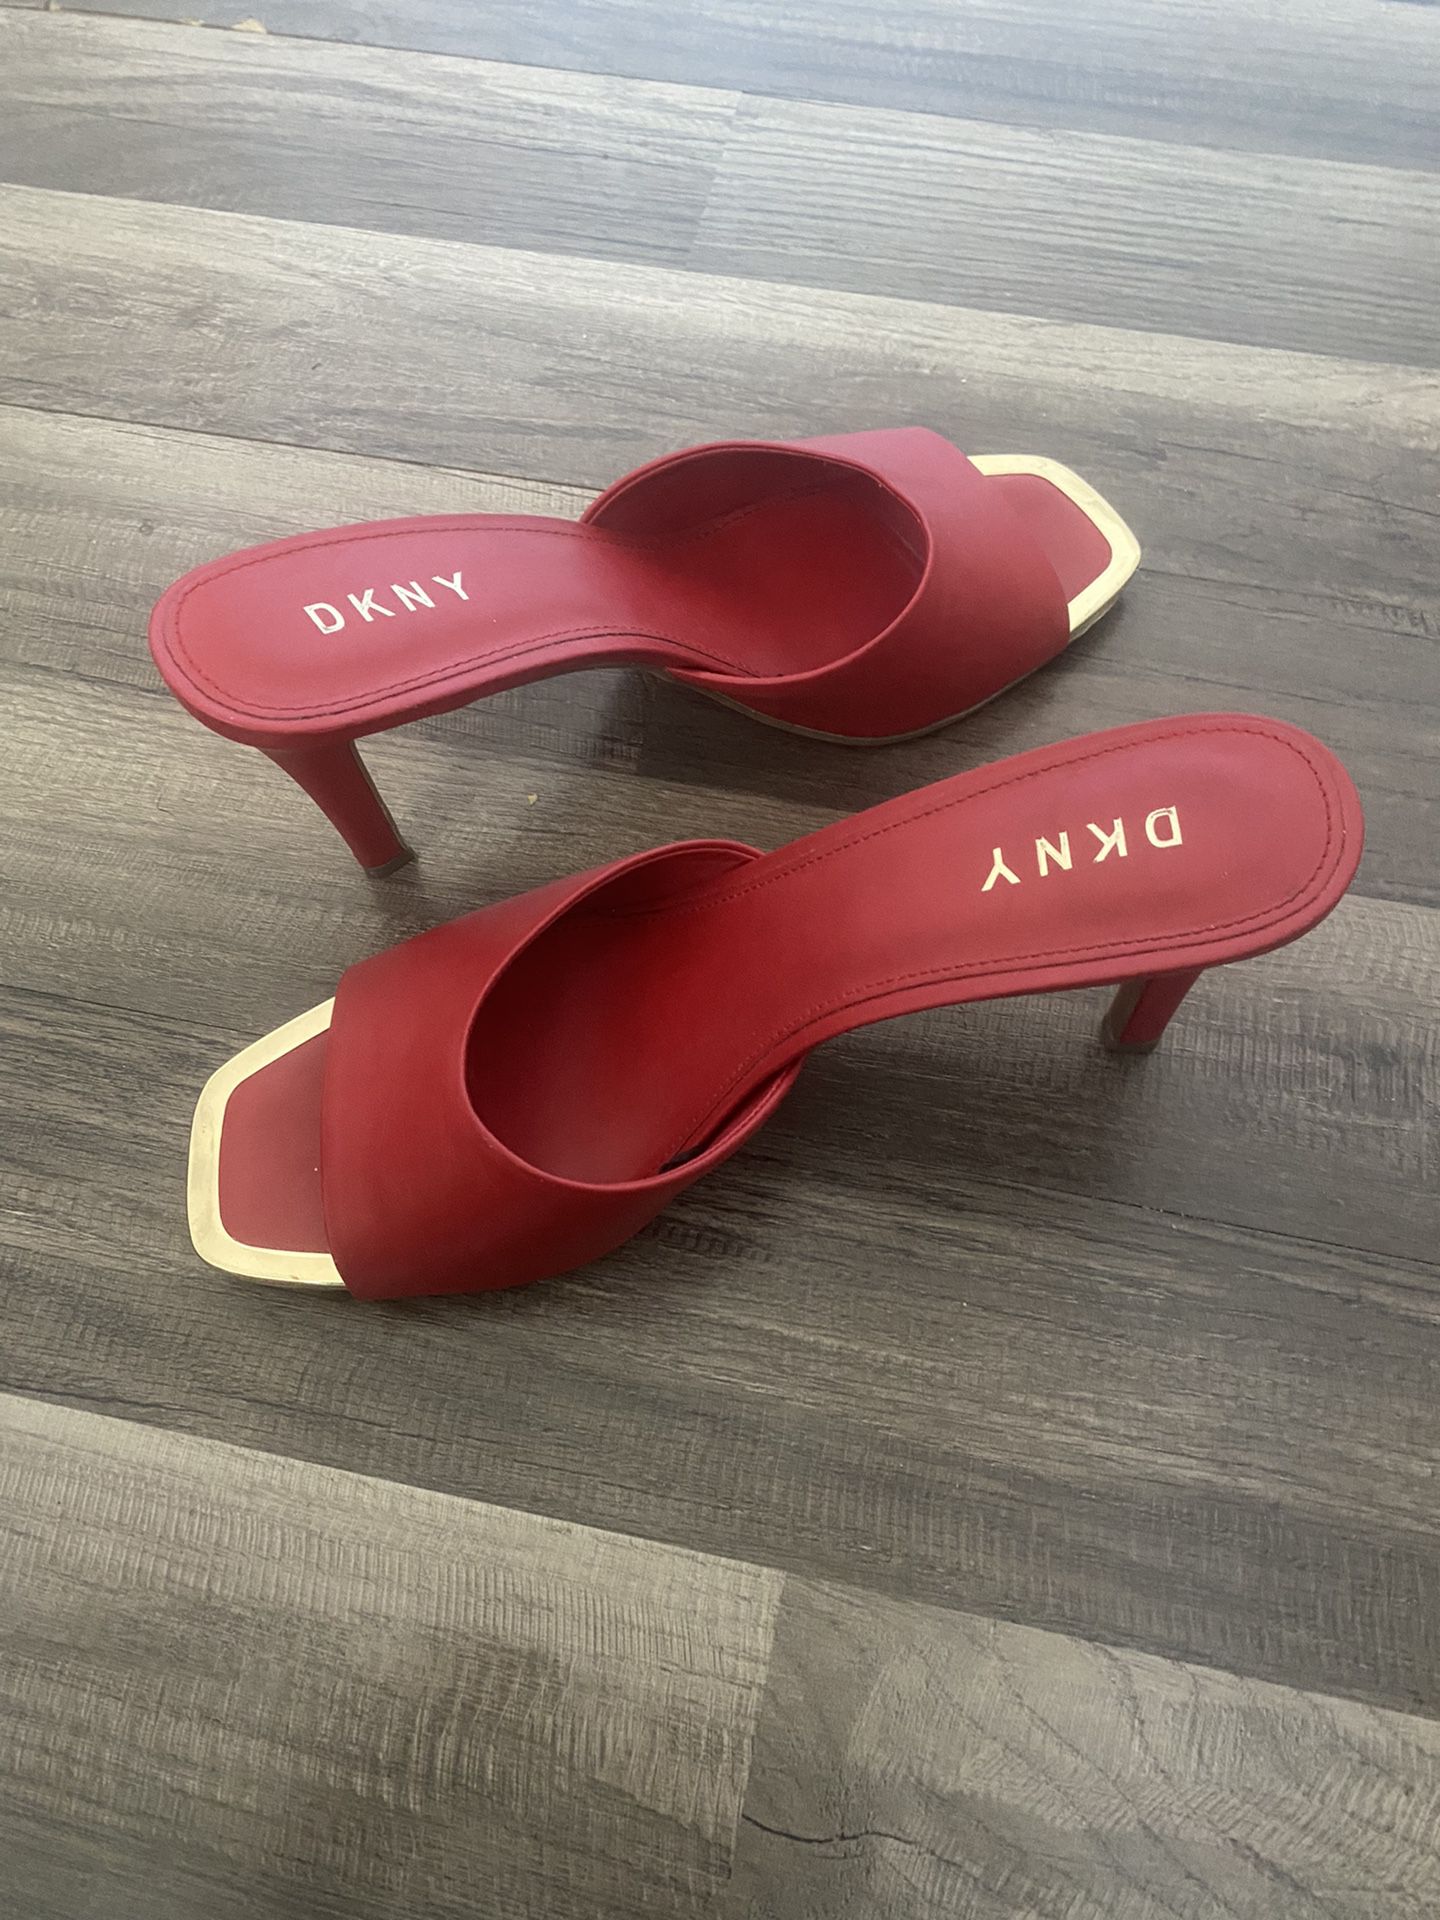 Red DKNY heels